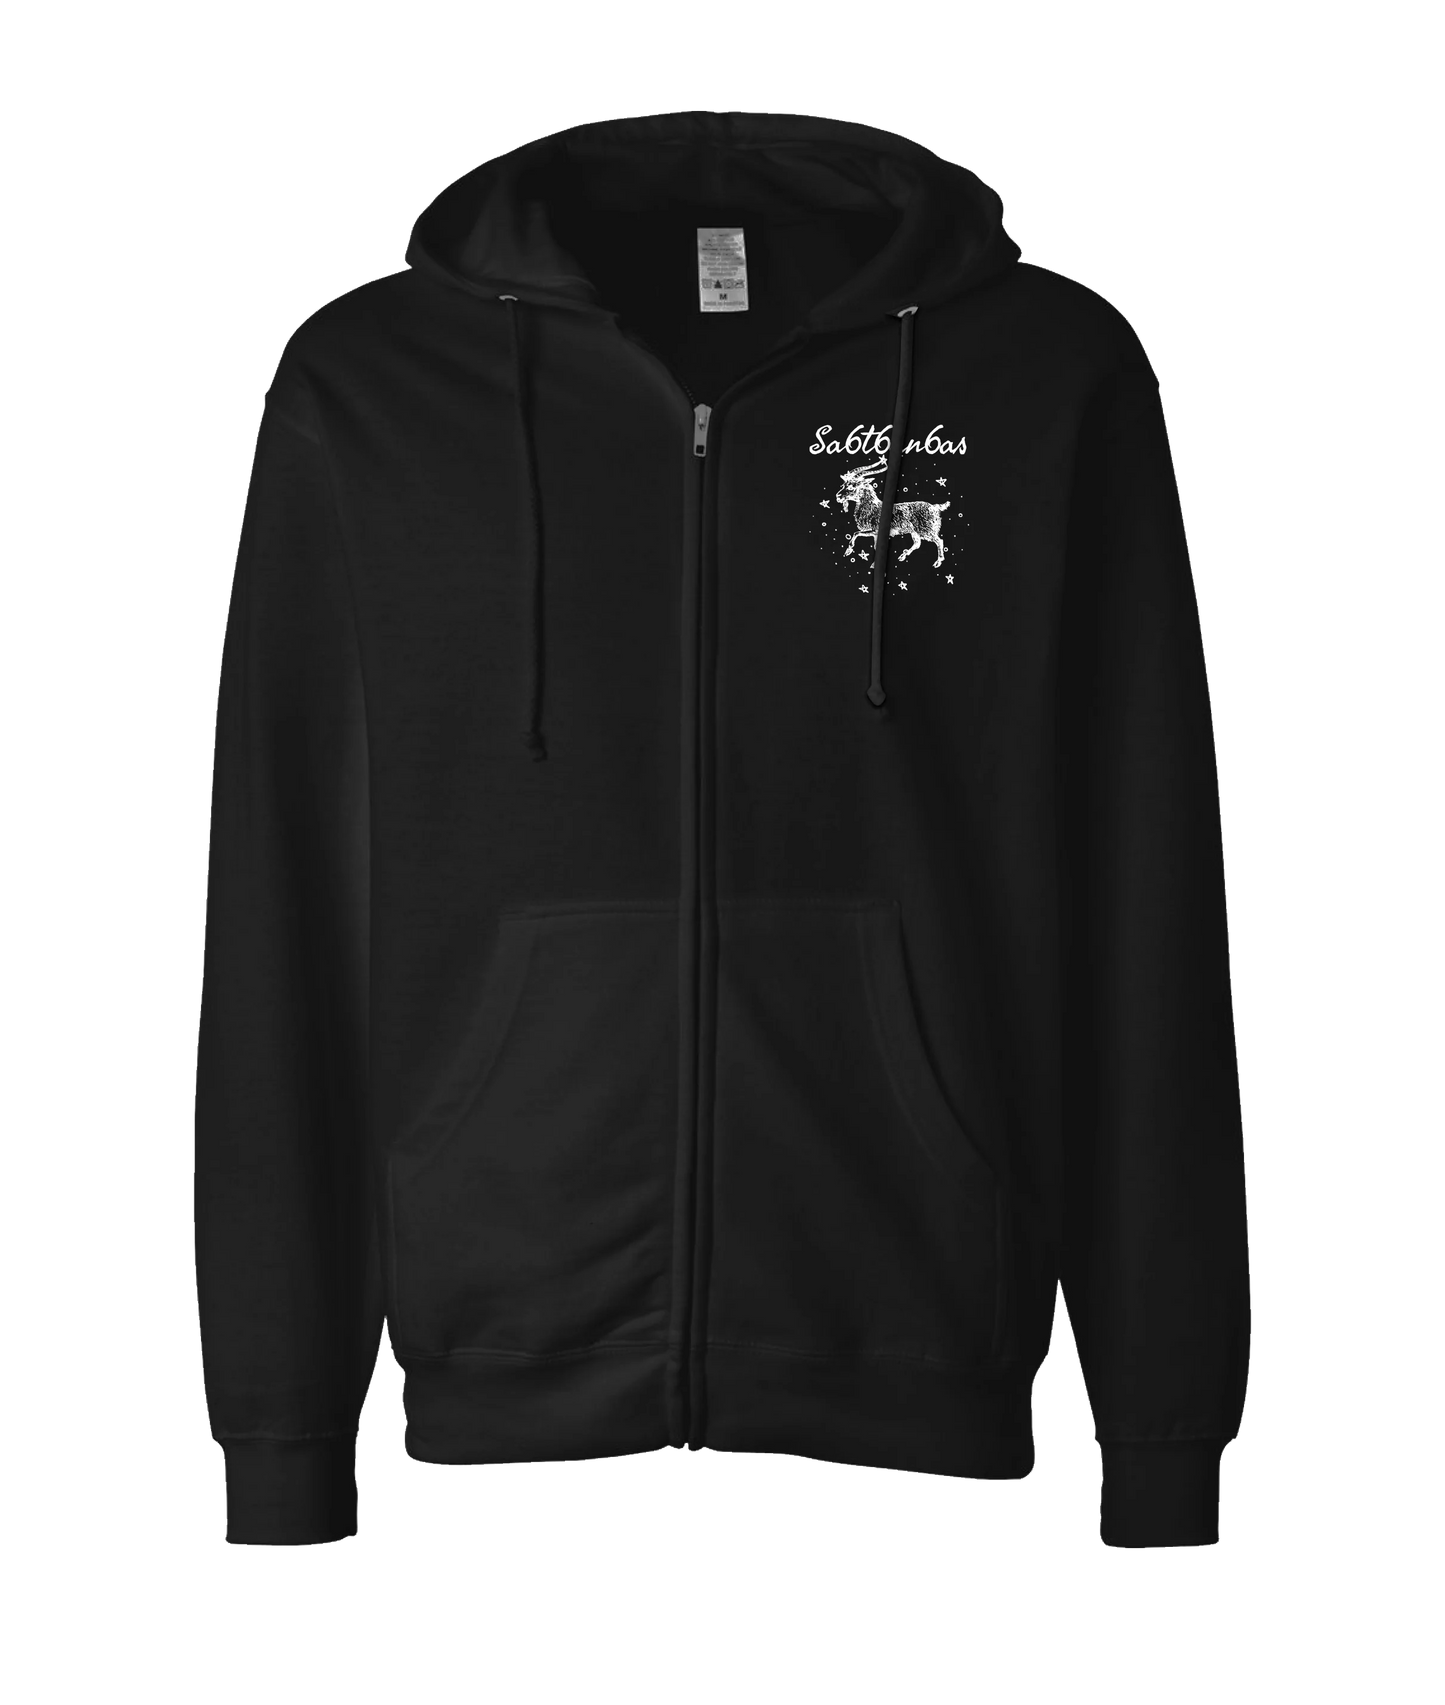 Ostrich Inc - Logo 2 - Black Zip Up Hoodie